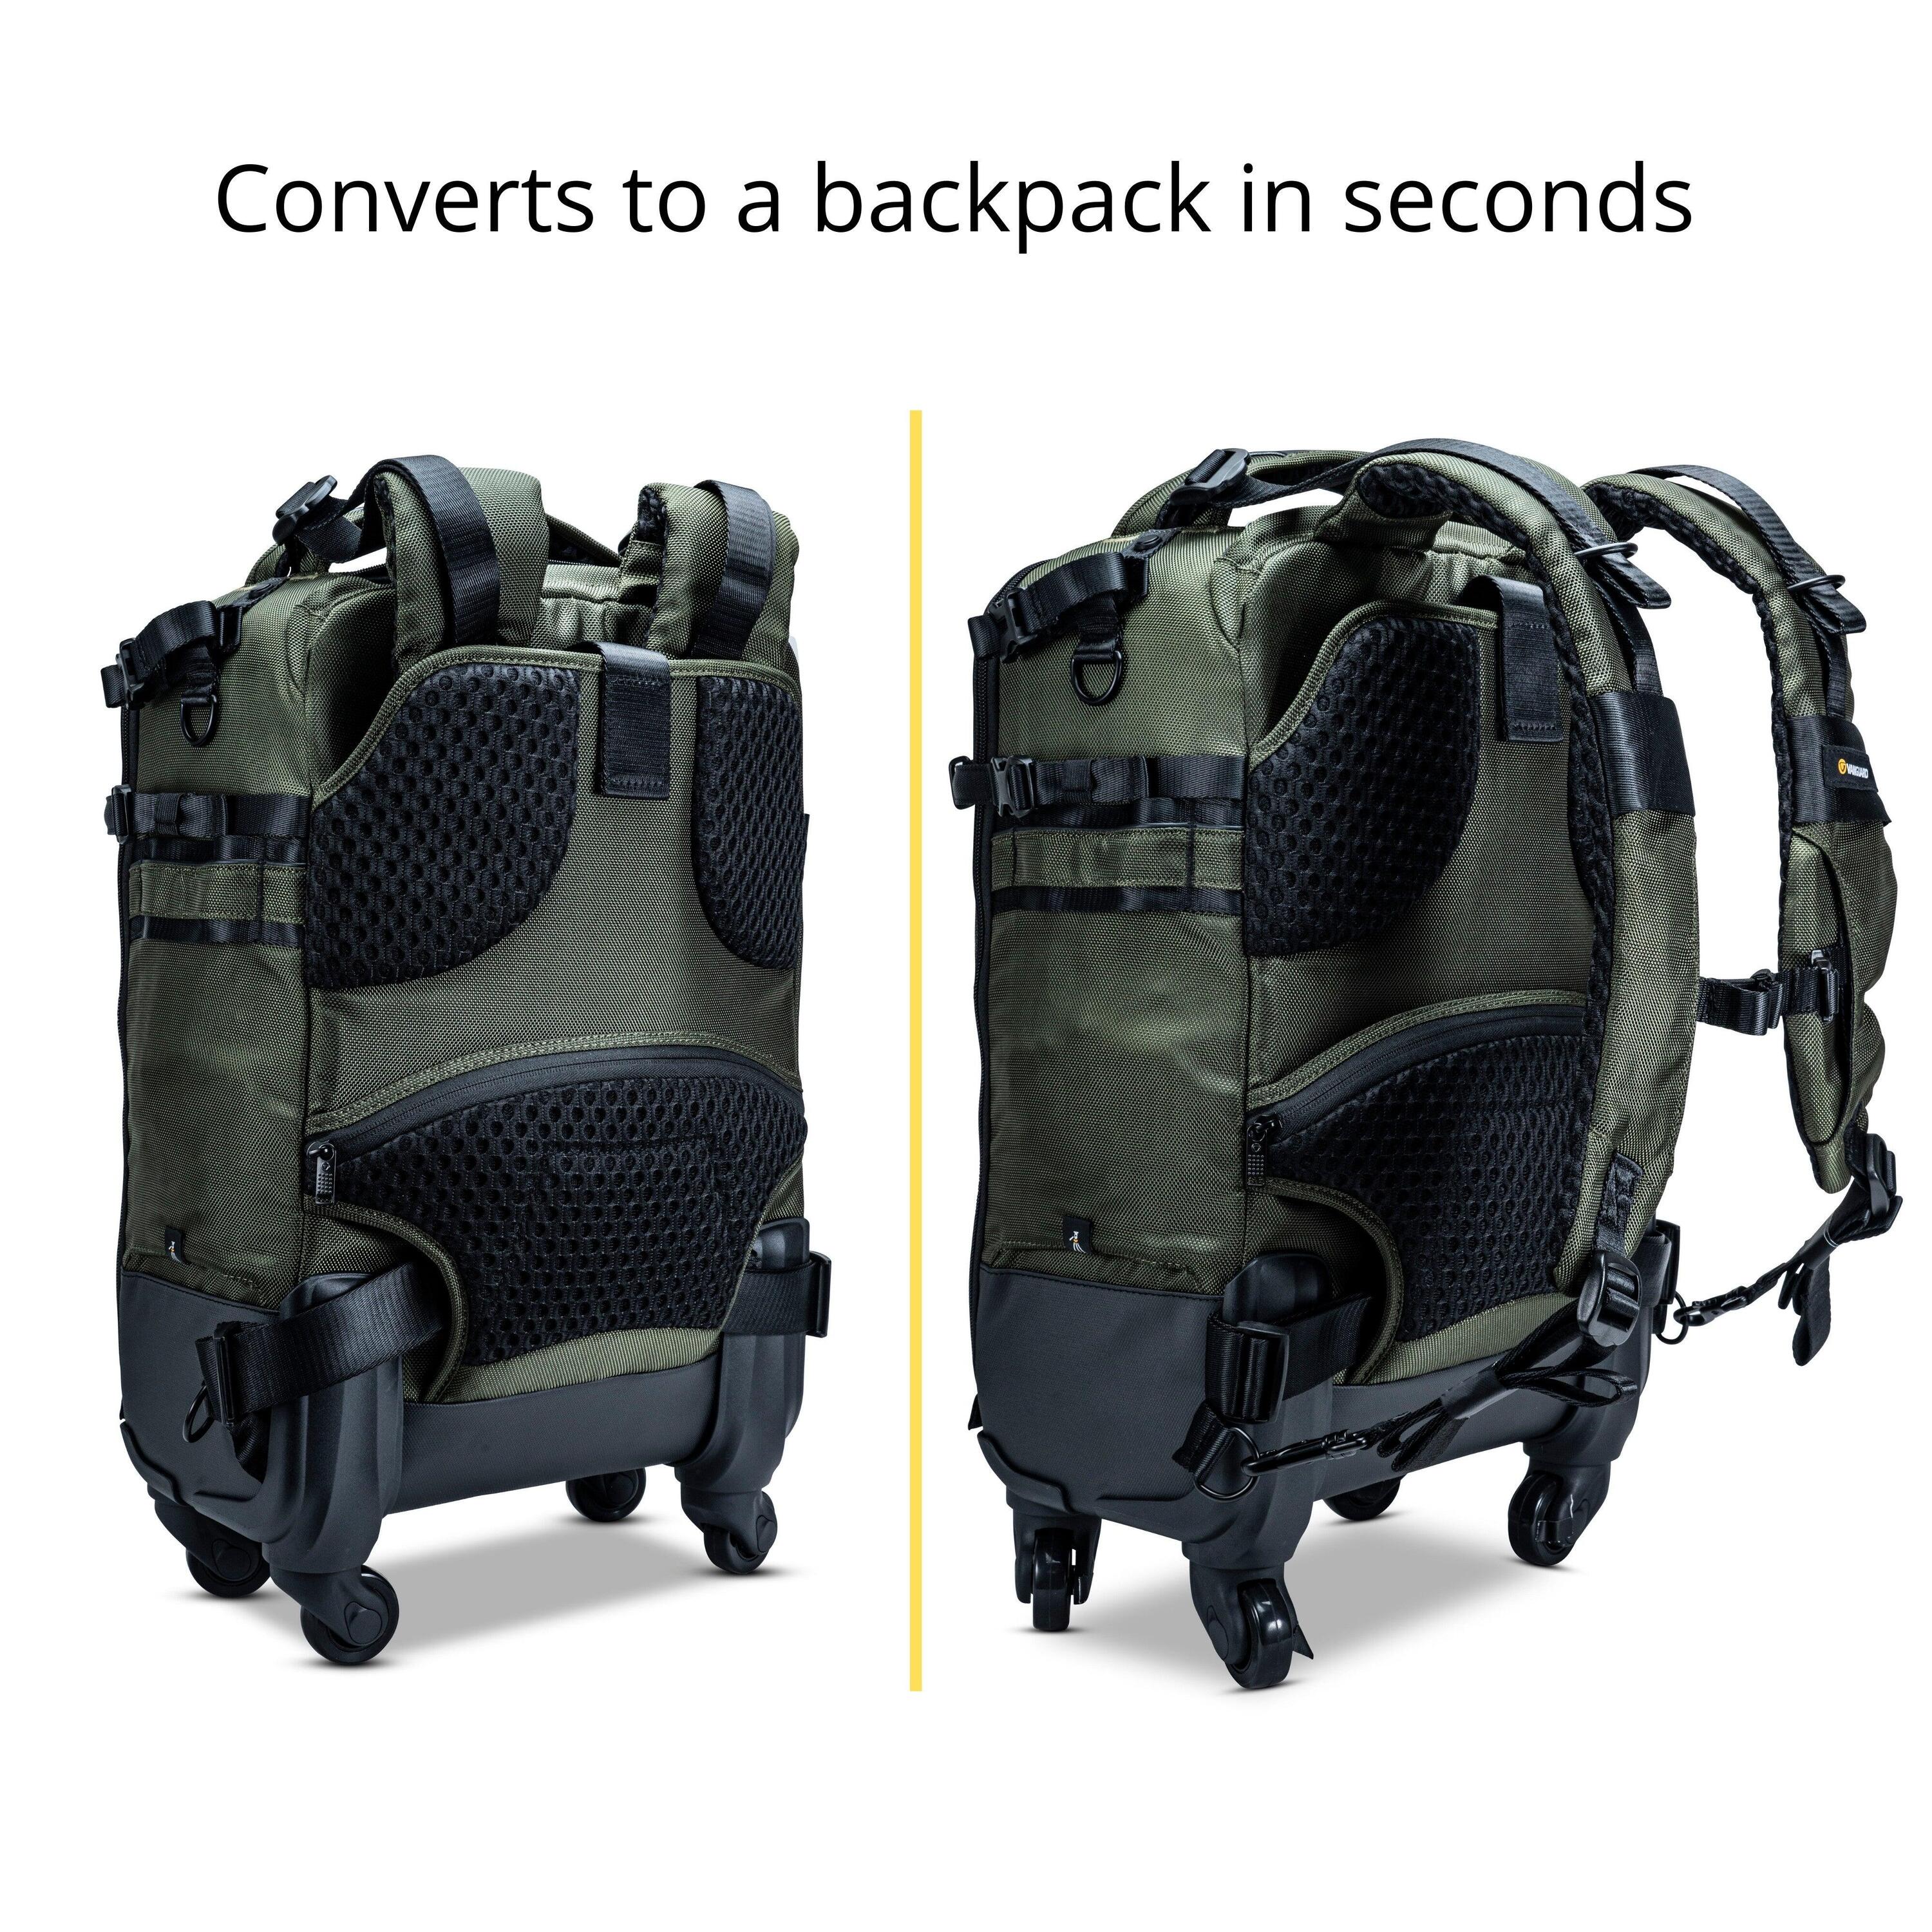 VEO Select 55BT GR - 4-wheel Camera Roller Case/Backpack - Green 1/5